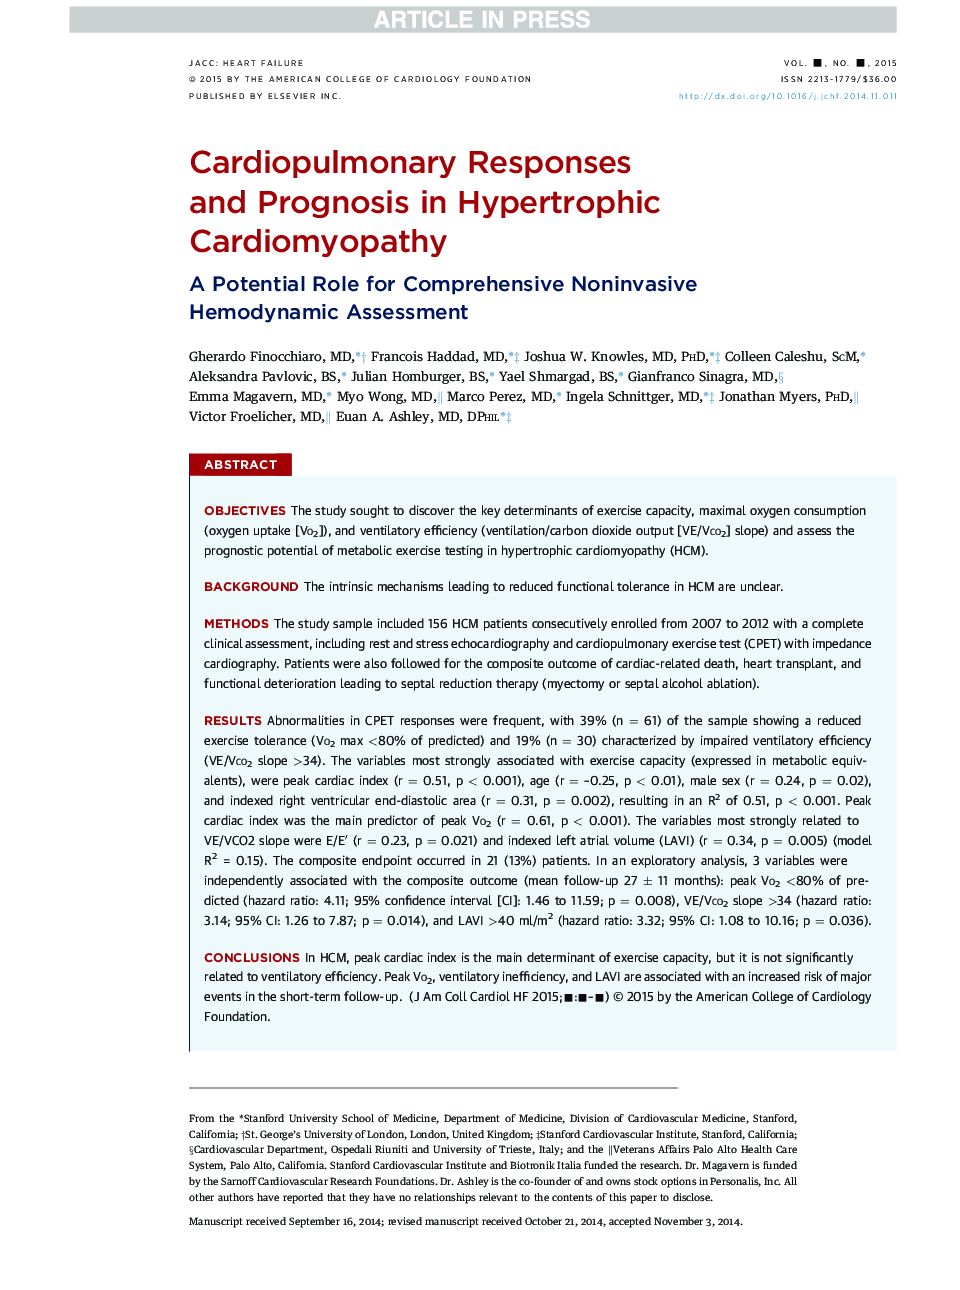 Cardiopulmonary Responses and Prognosis in Hypertrophic Cardiomyopathy